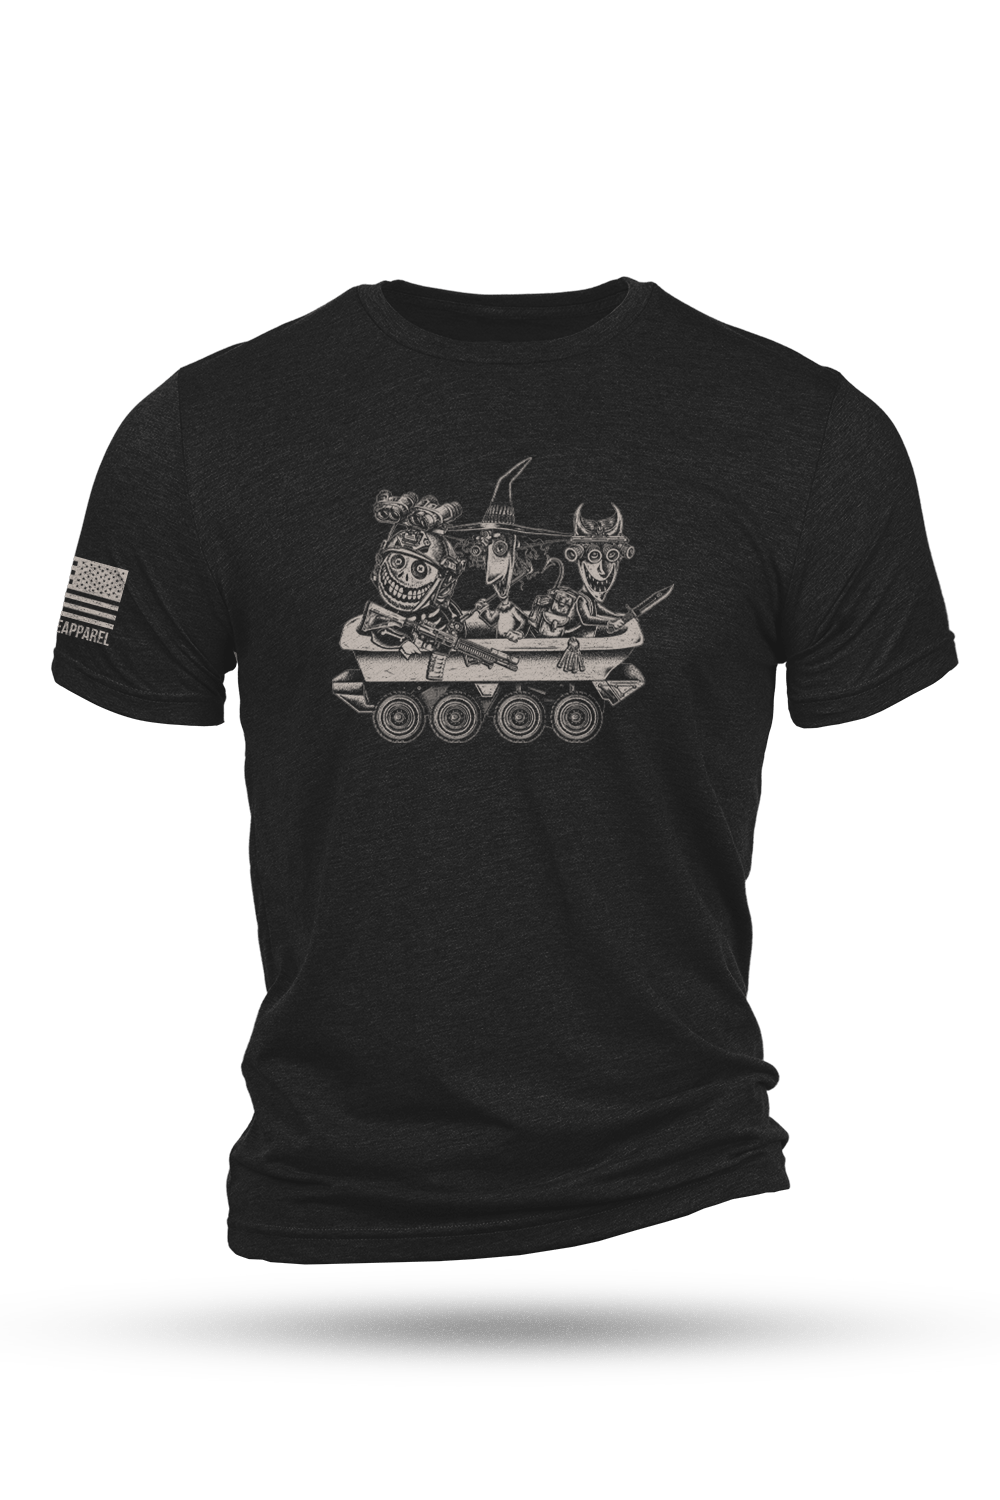  Aaron Judge T-Shirt (Premium Men's T-Shirt, Small, Tri